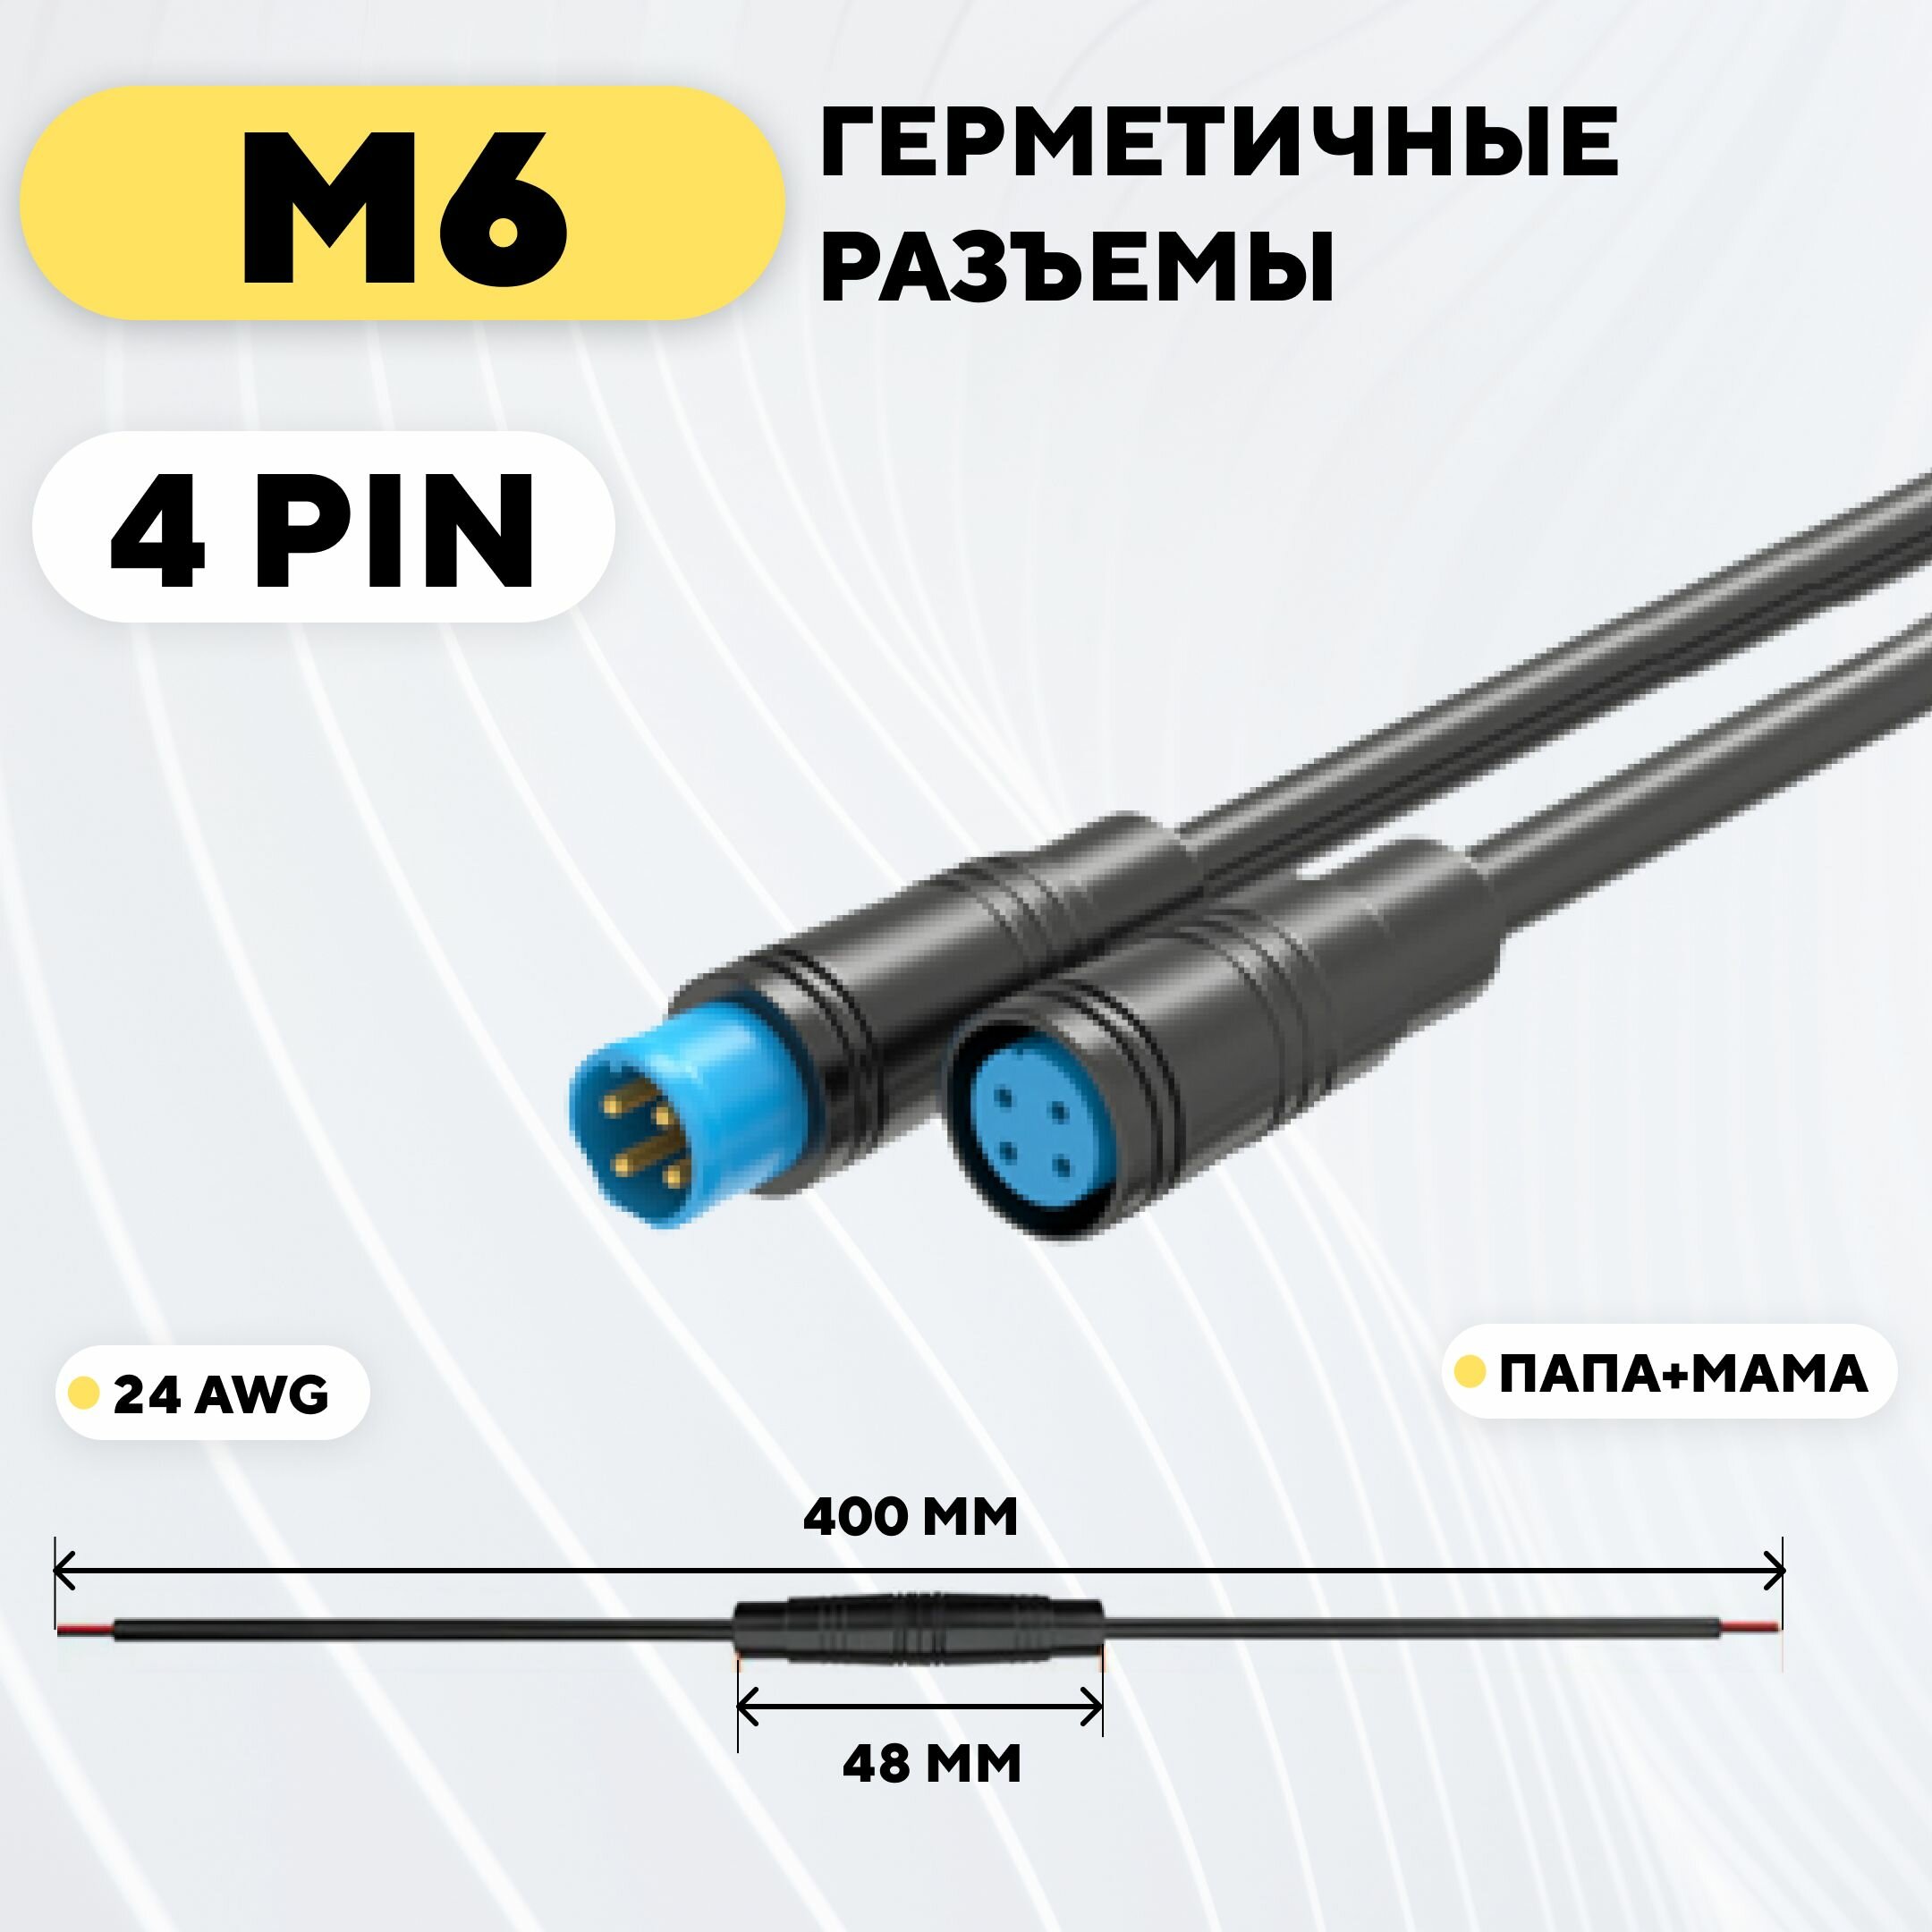 Разъем M6 водонепроницаемый, пара, мама+папа (4 pin)